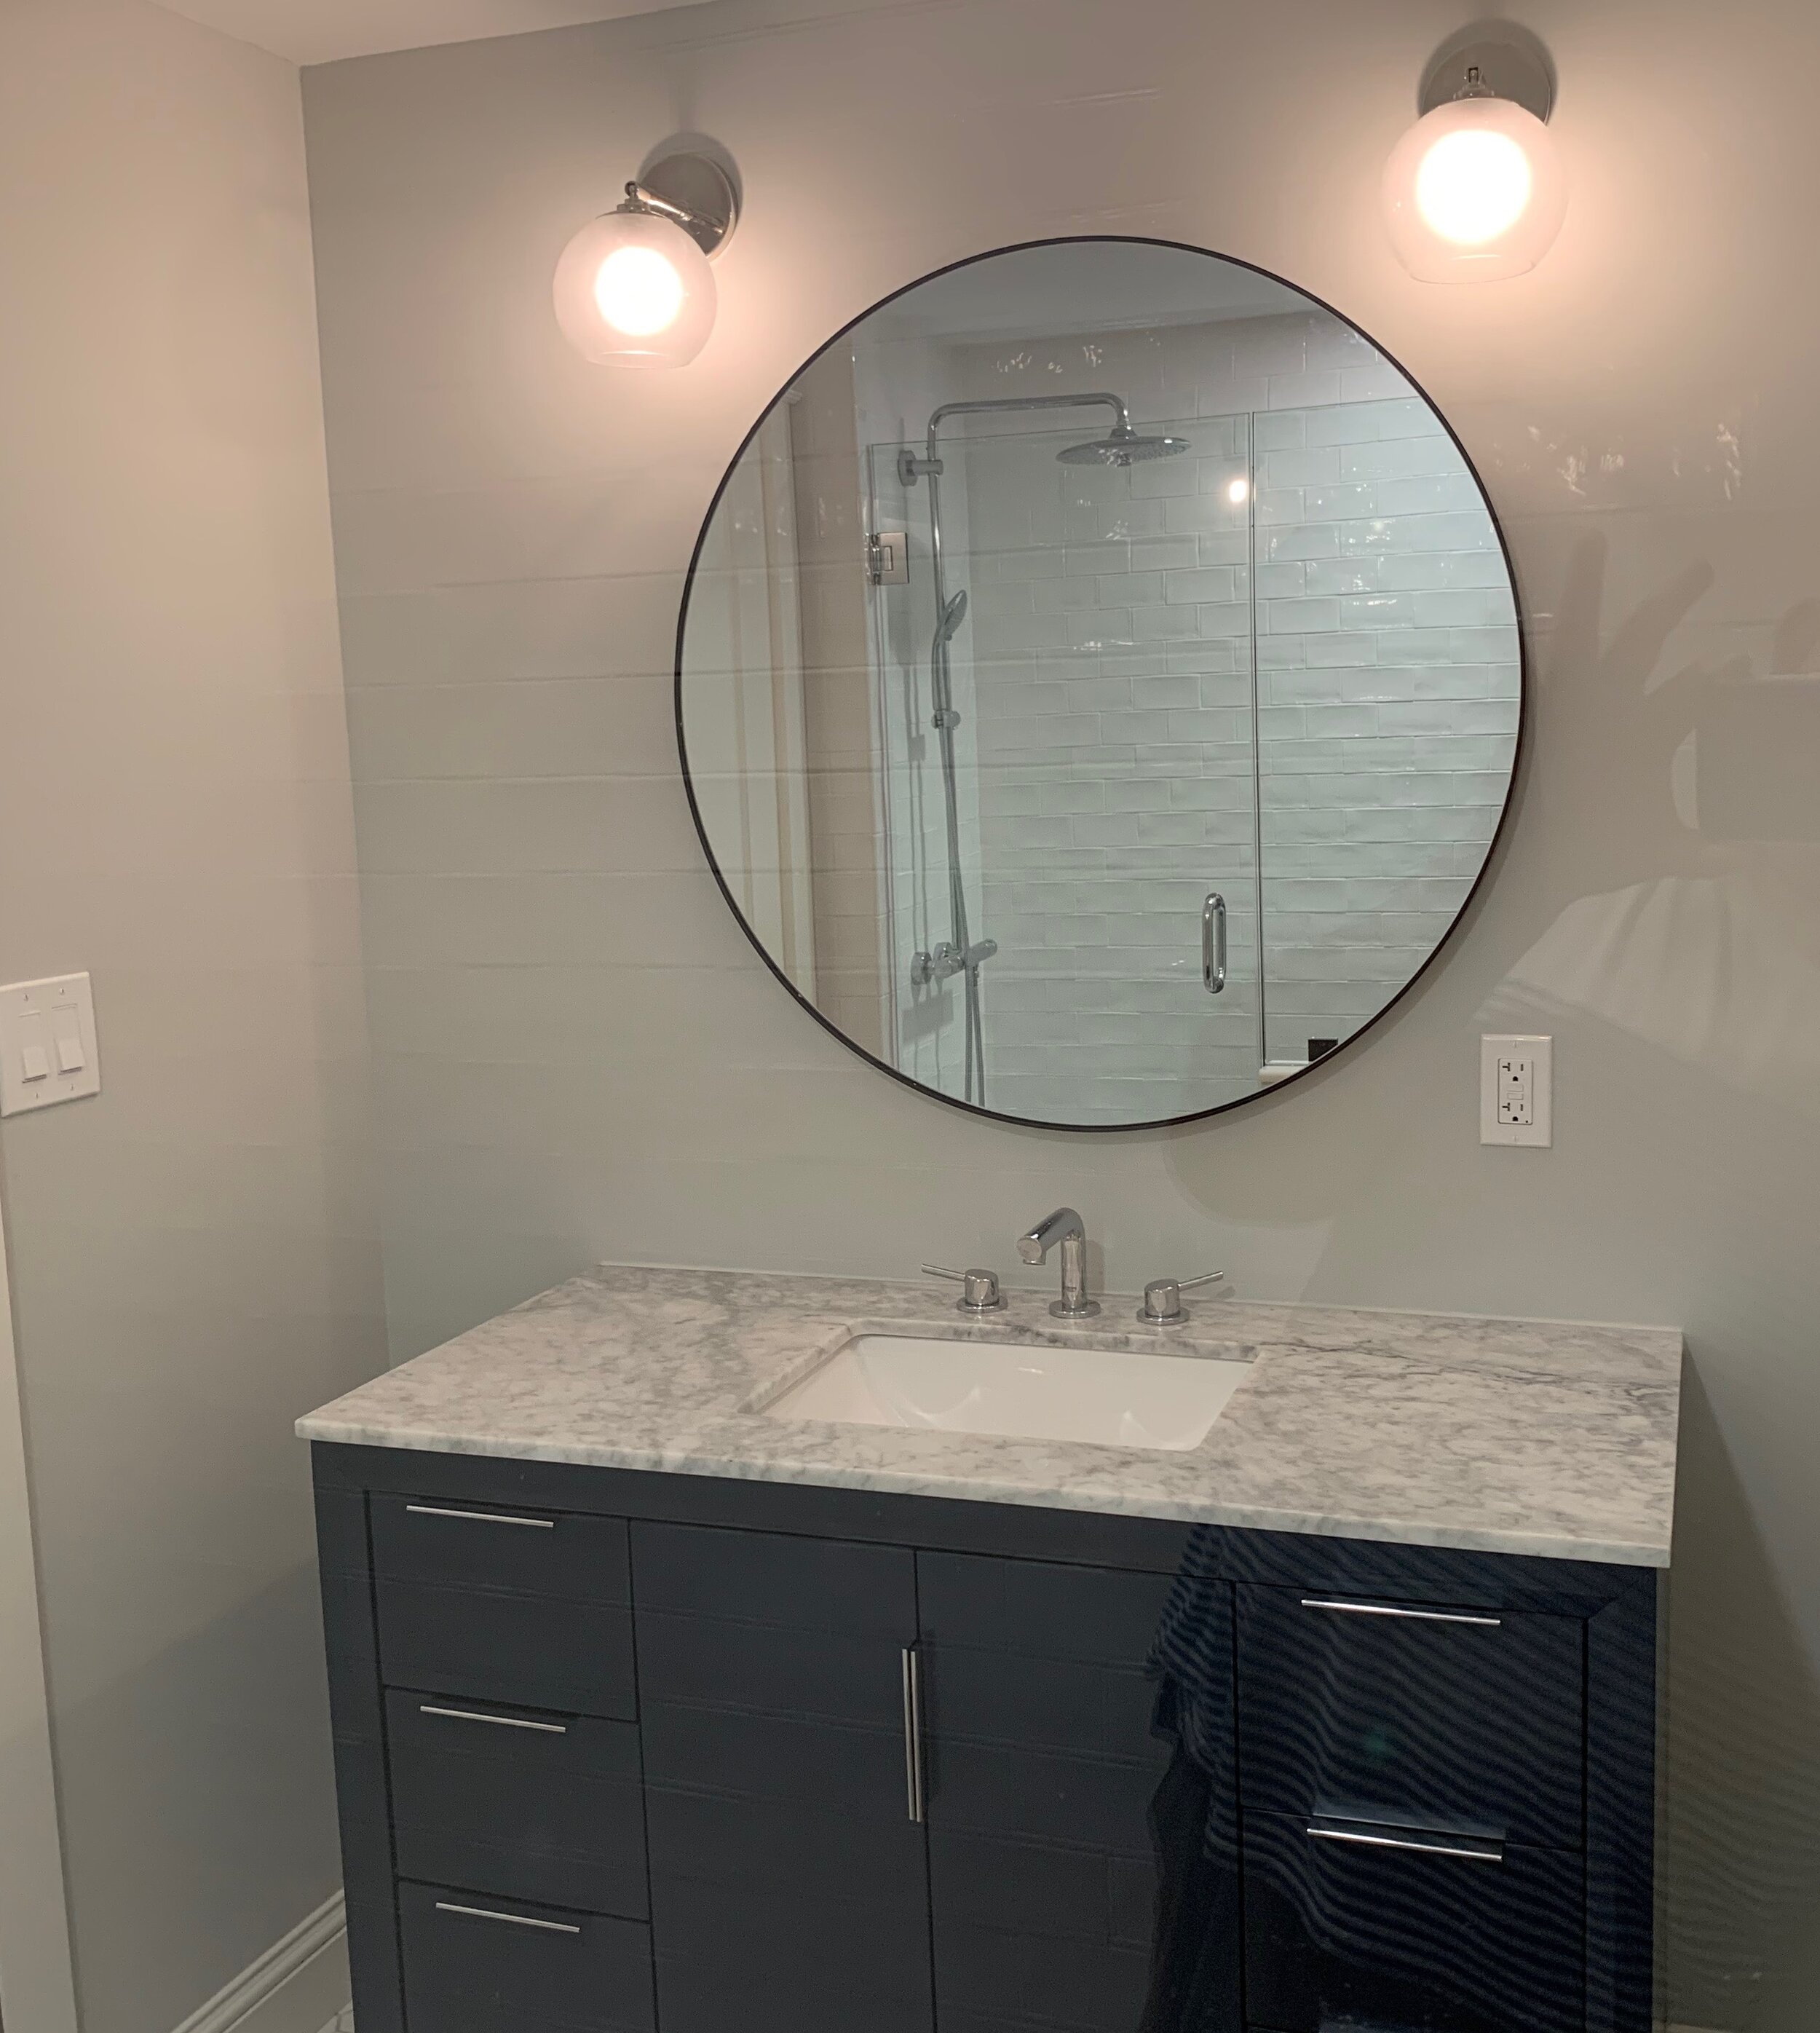  Full Bathroom Remodel:  New Plumbing, Wall and Floor Tiles, Vanity with Countertop, Mirror, and Lighting. 